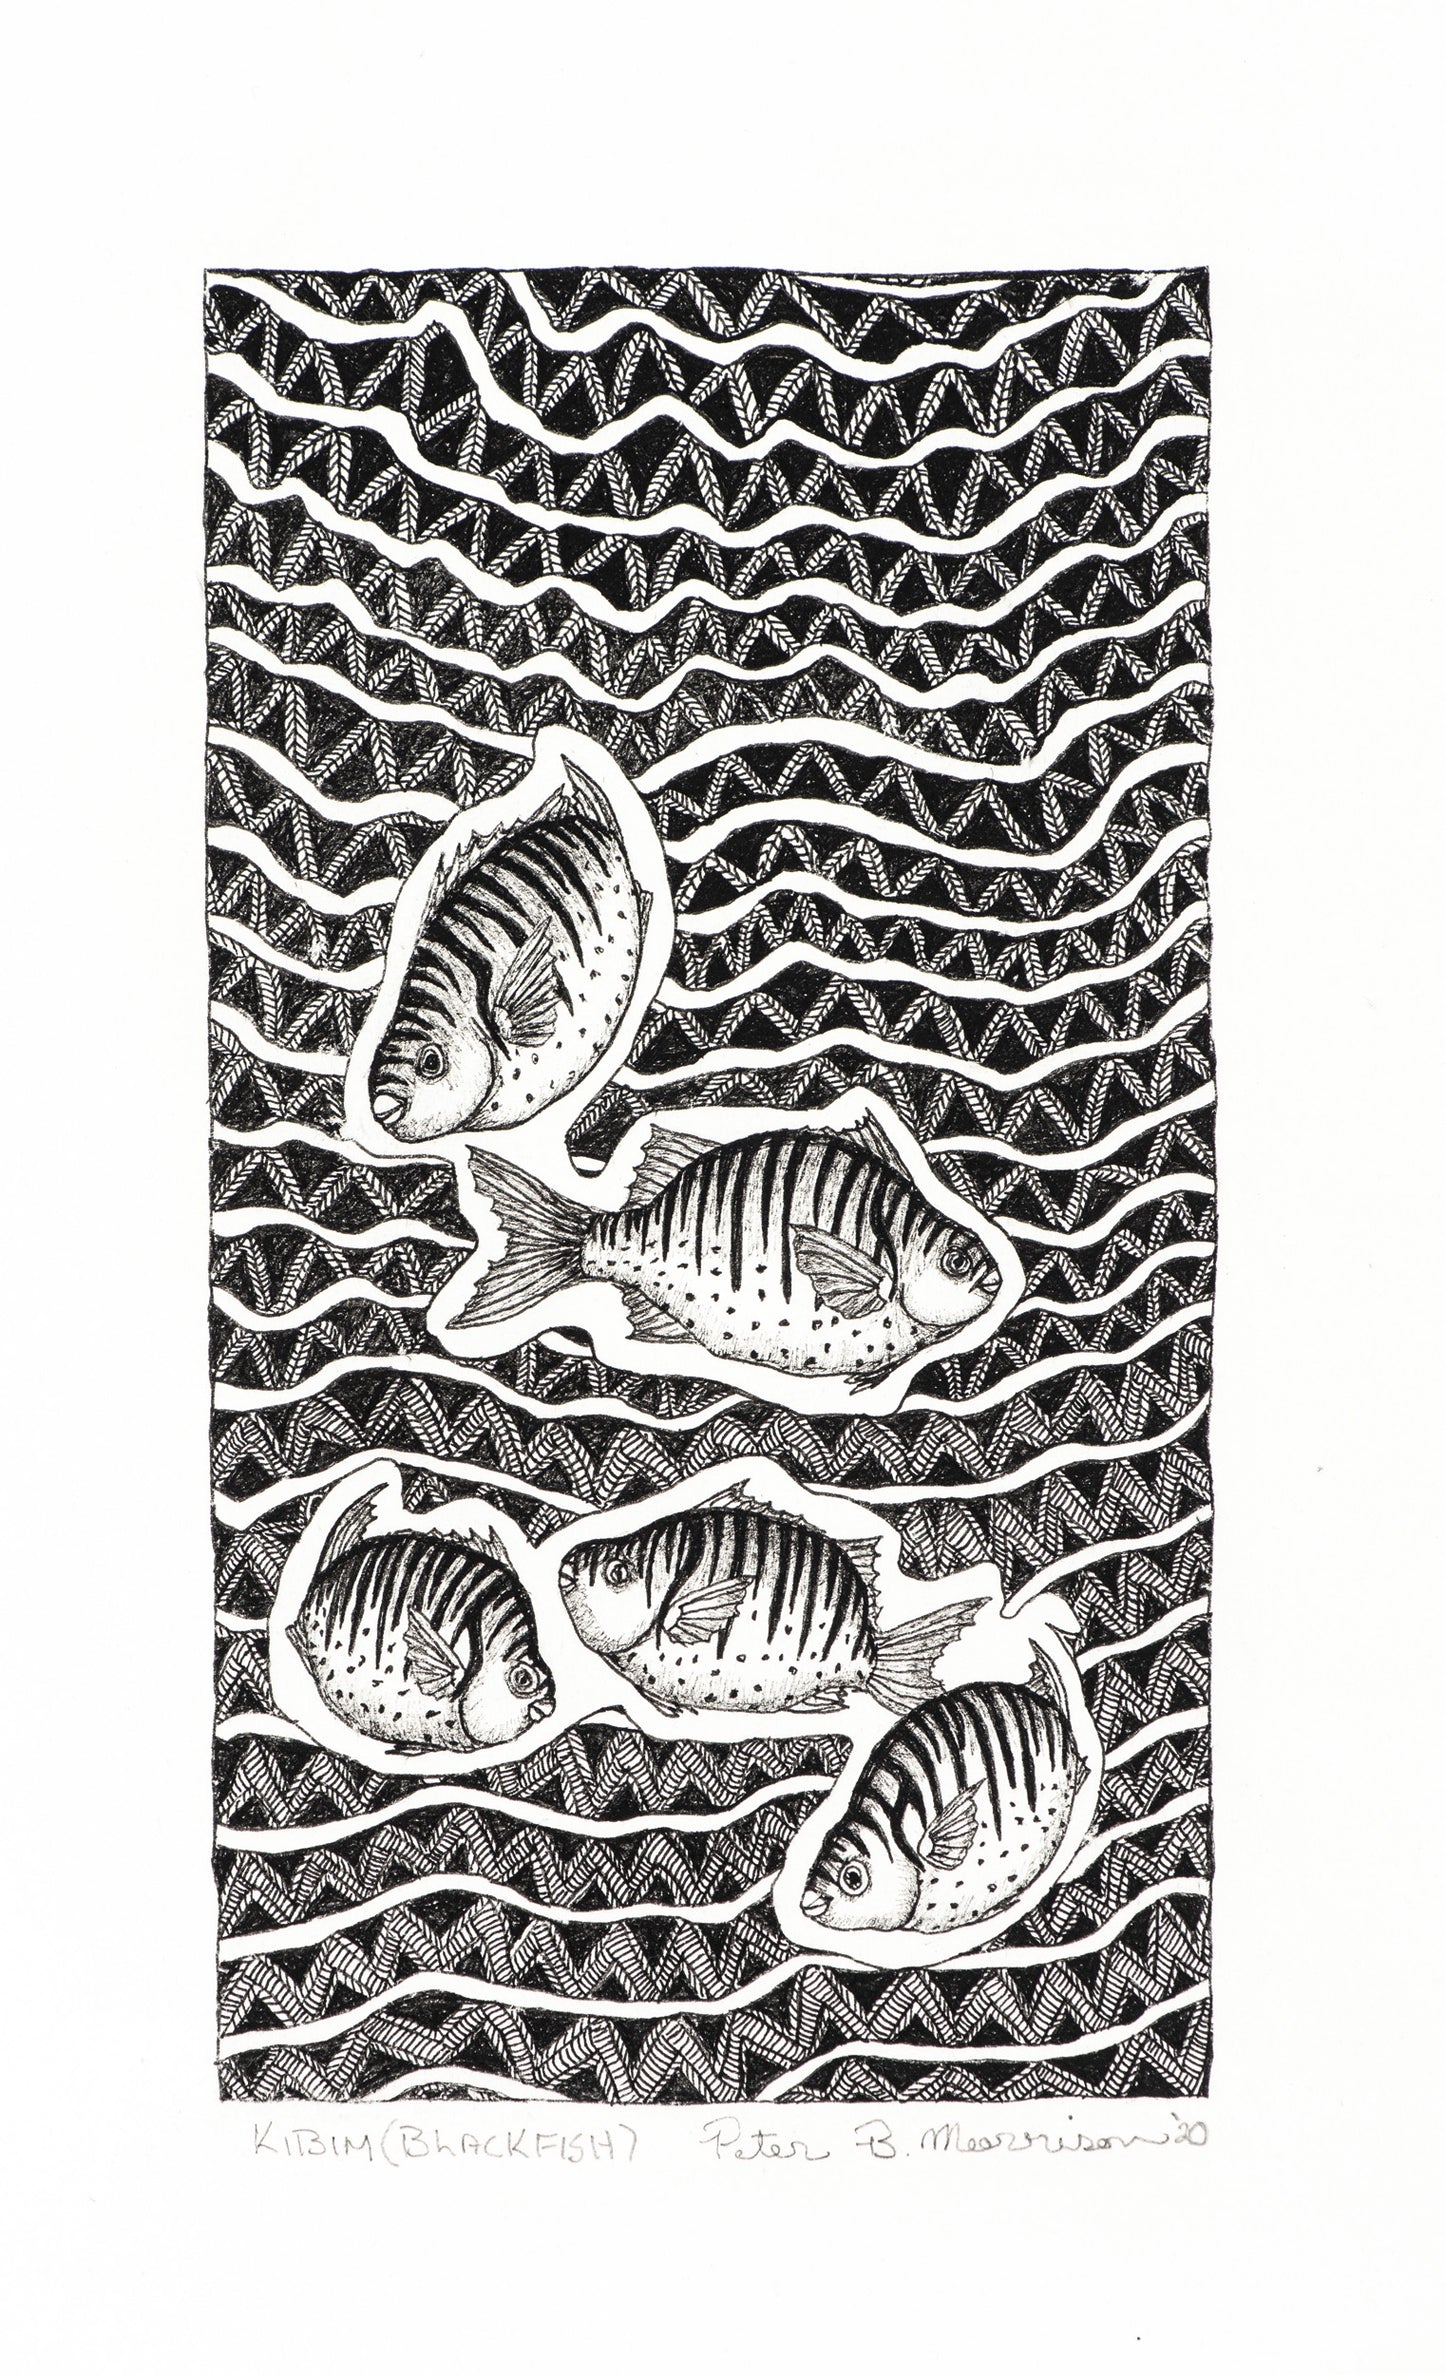 PETER B MORRISON | 'Kibim' (Black Fish) Drawing | Pen and ink on archival paper